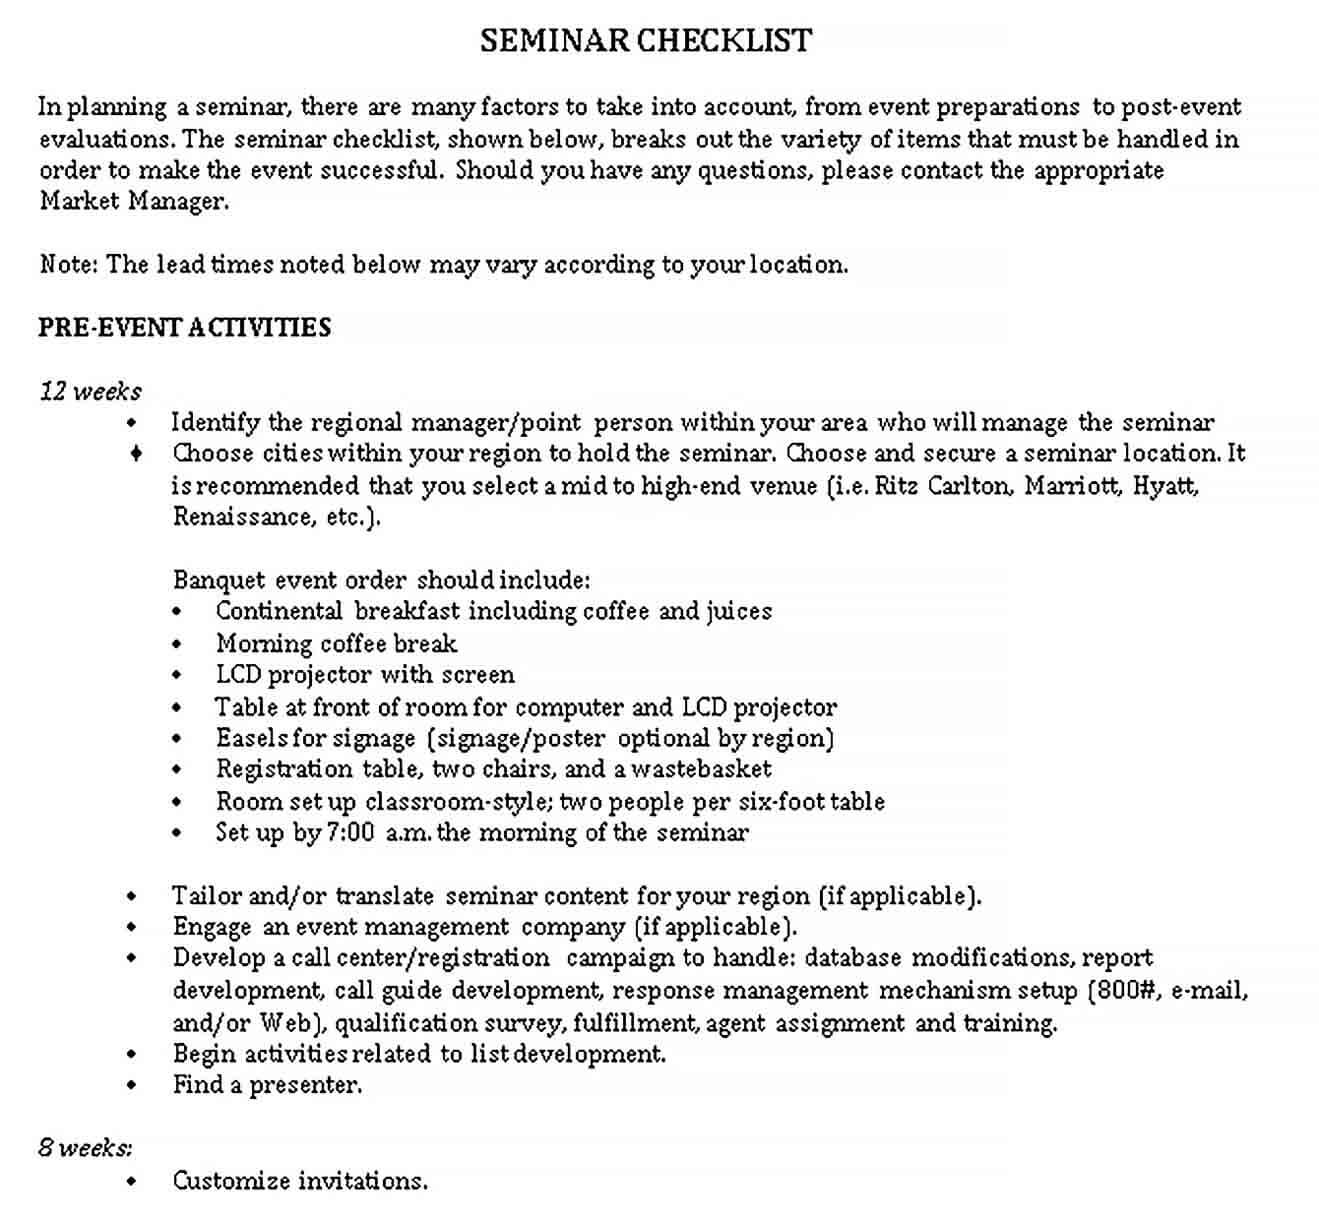 Sample Seminar Checklist